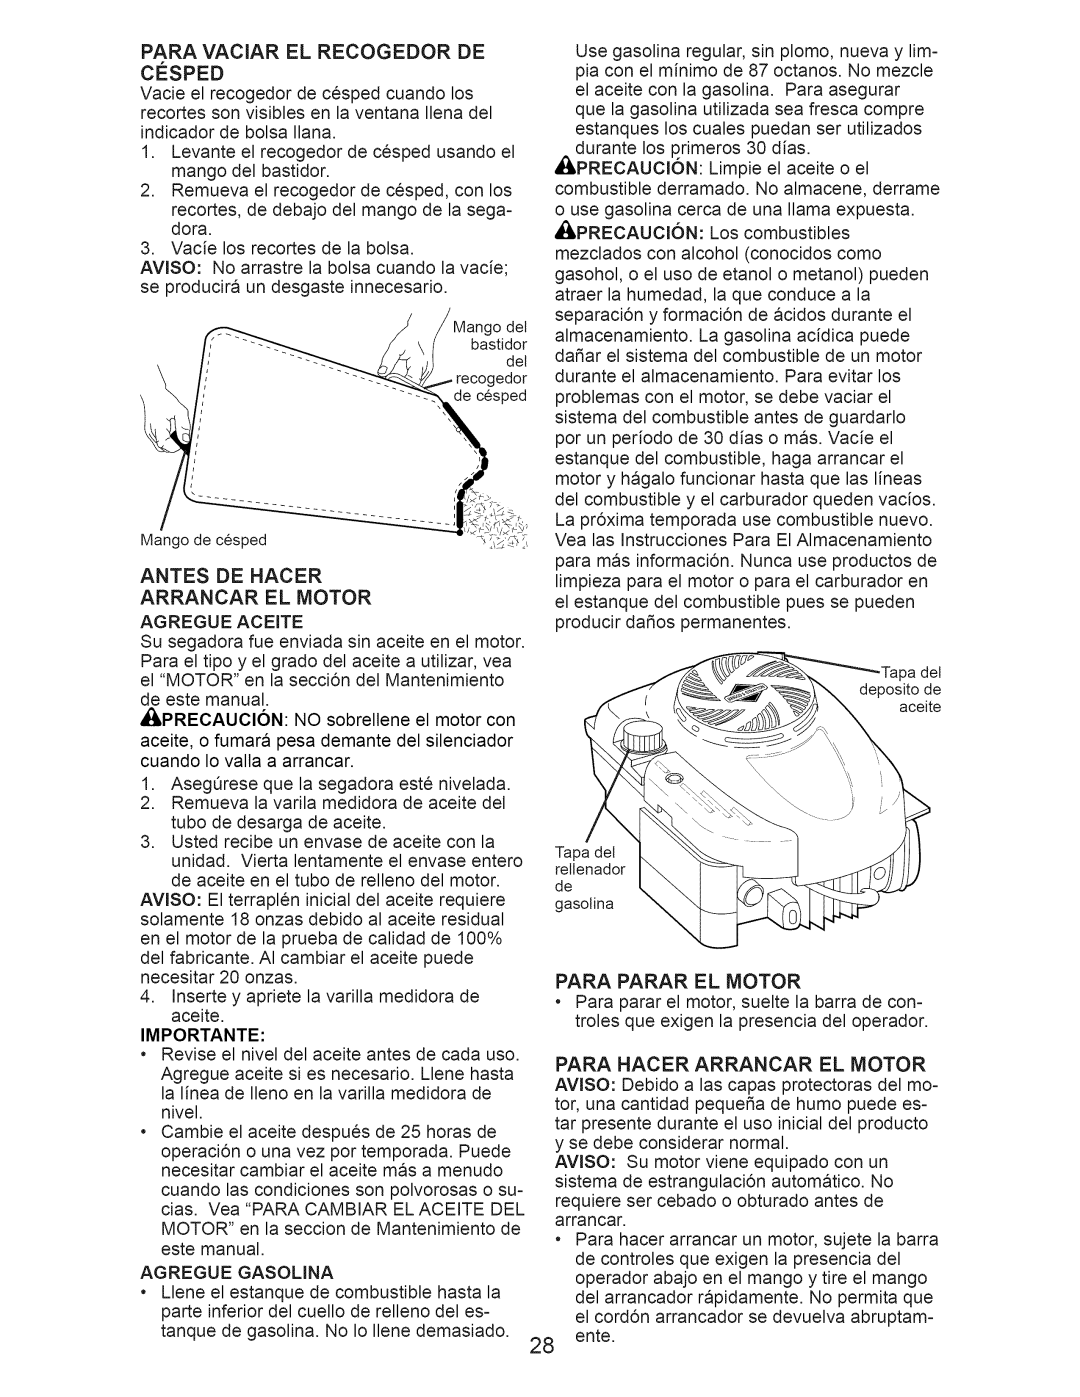 Craftsman 917.374540 owner manual Antes De Hacer Arrancar El Motor, Para Hacer Arrancar El Motor, Importante 